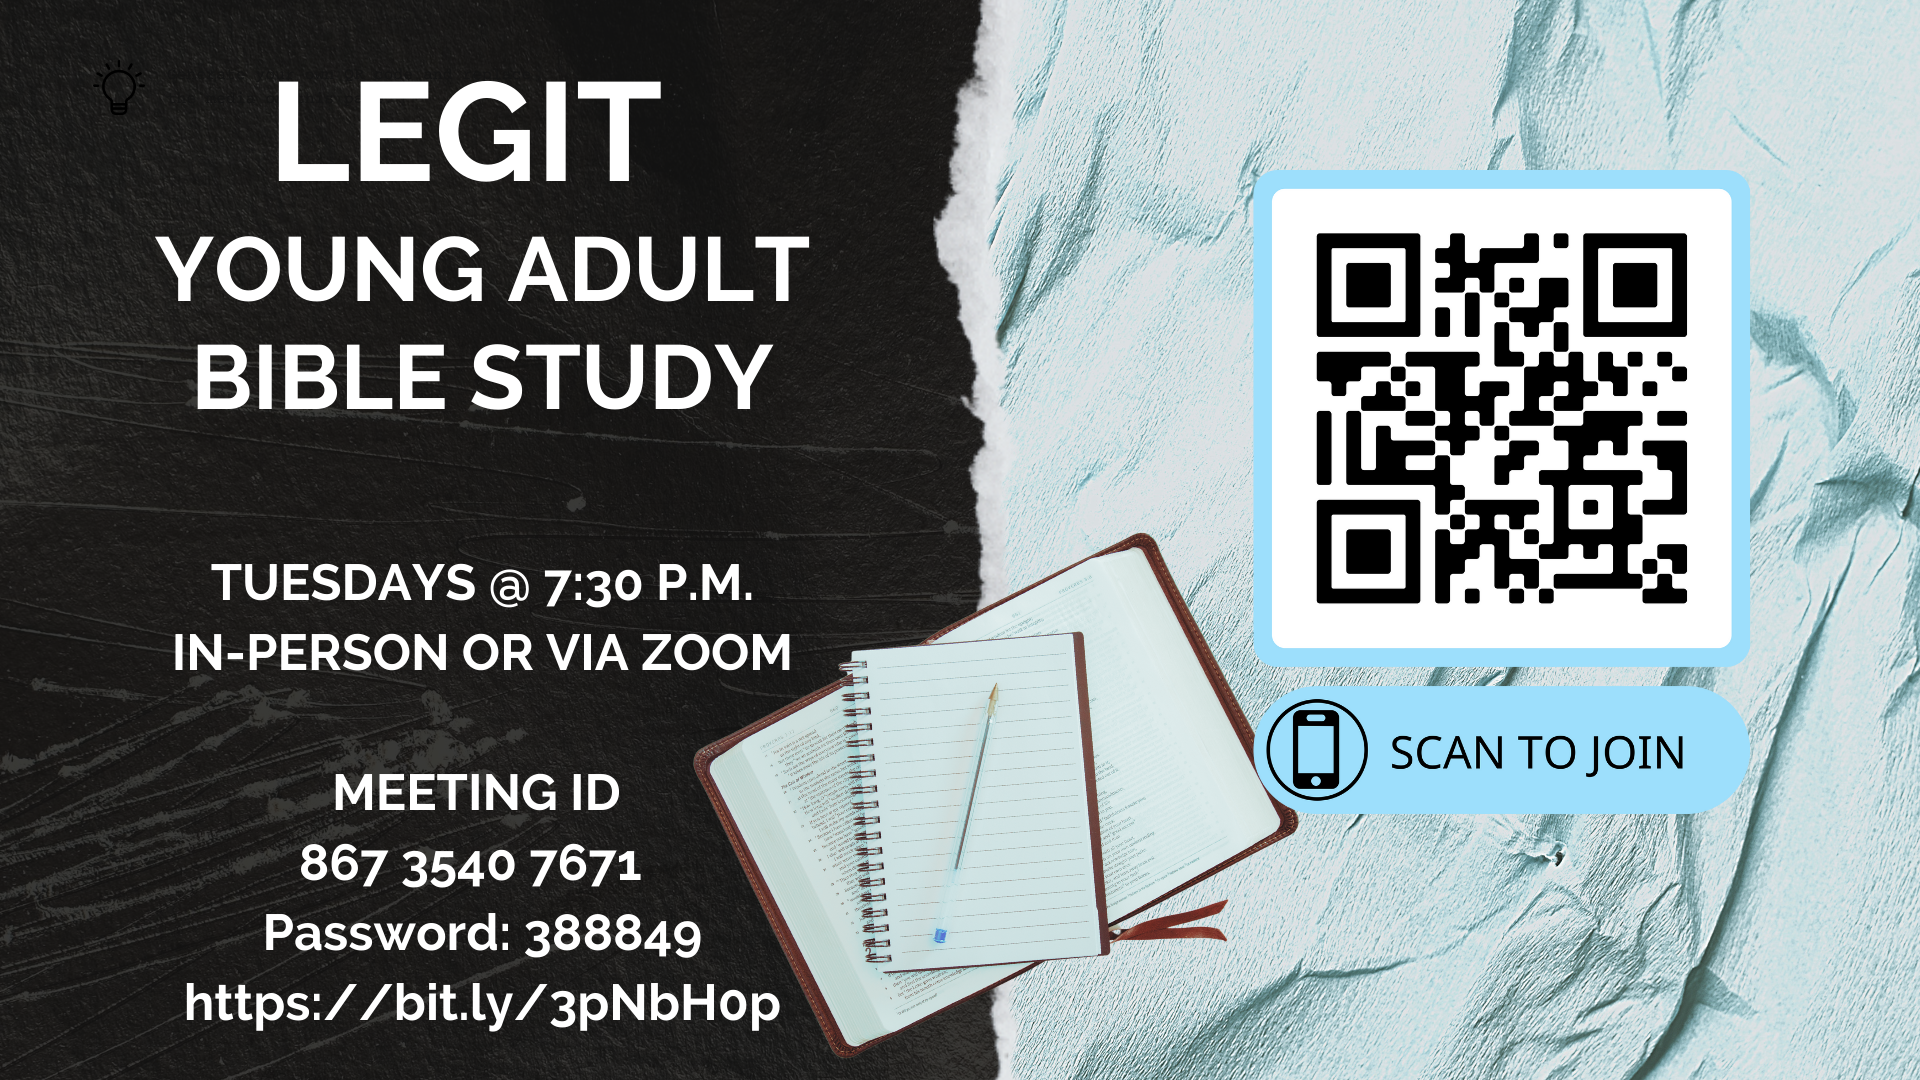 LEGIT Young Adult Bible Study head image